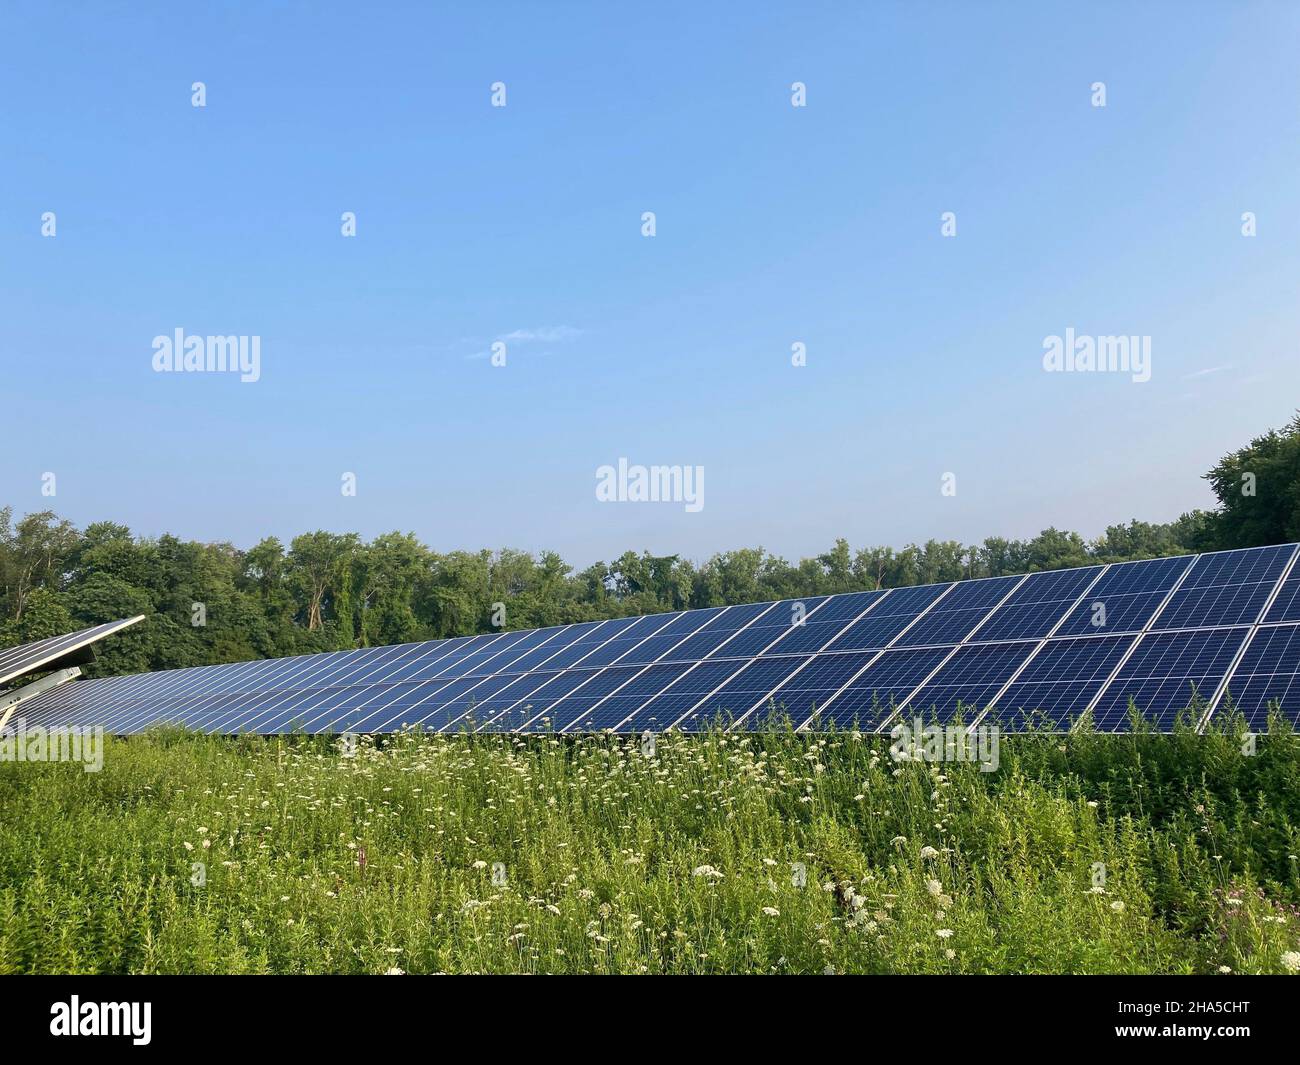 paneles solares que generan energía eléctrica,kingston,ny state,usa Foto de stock